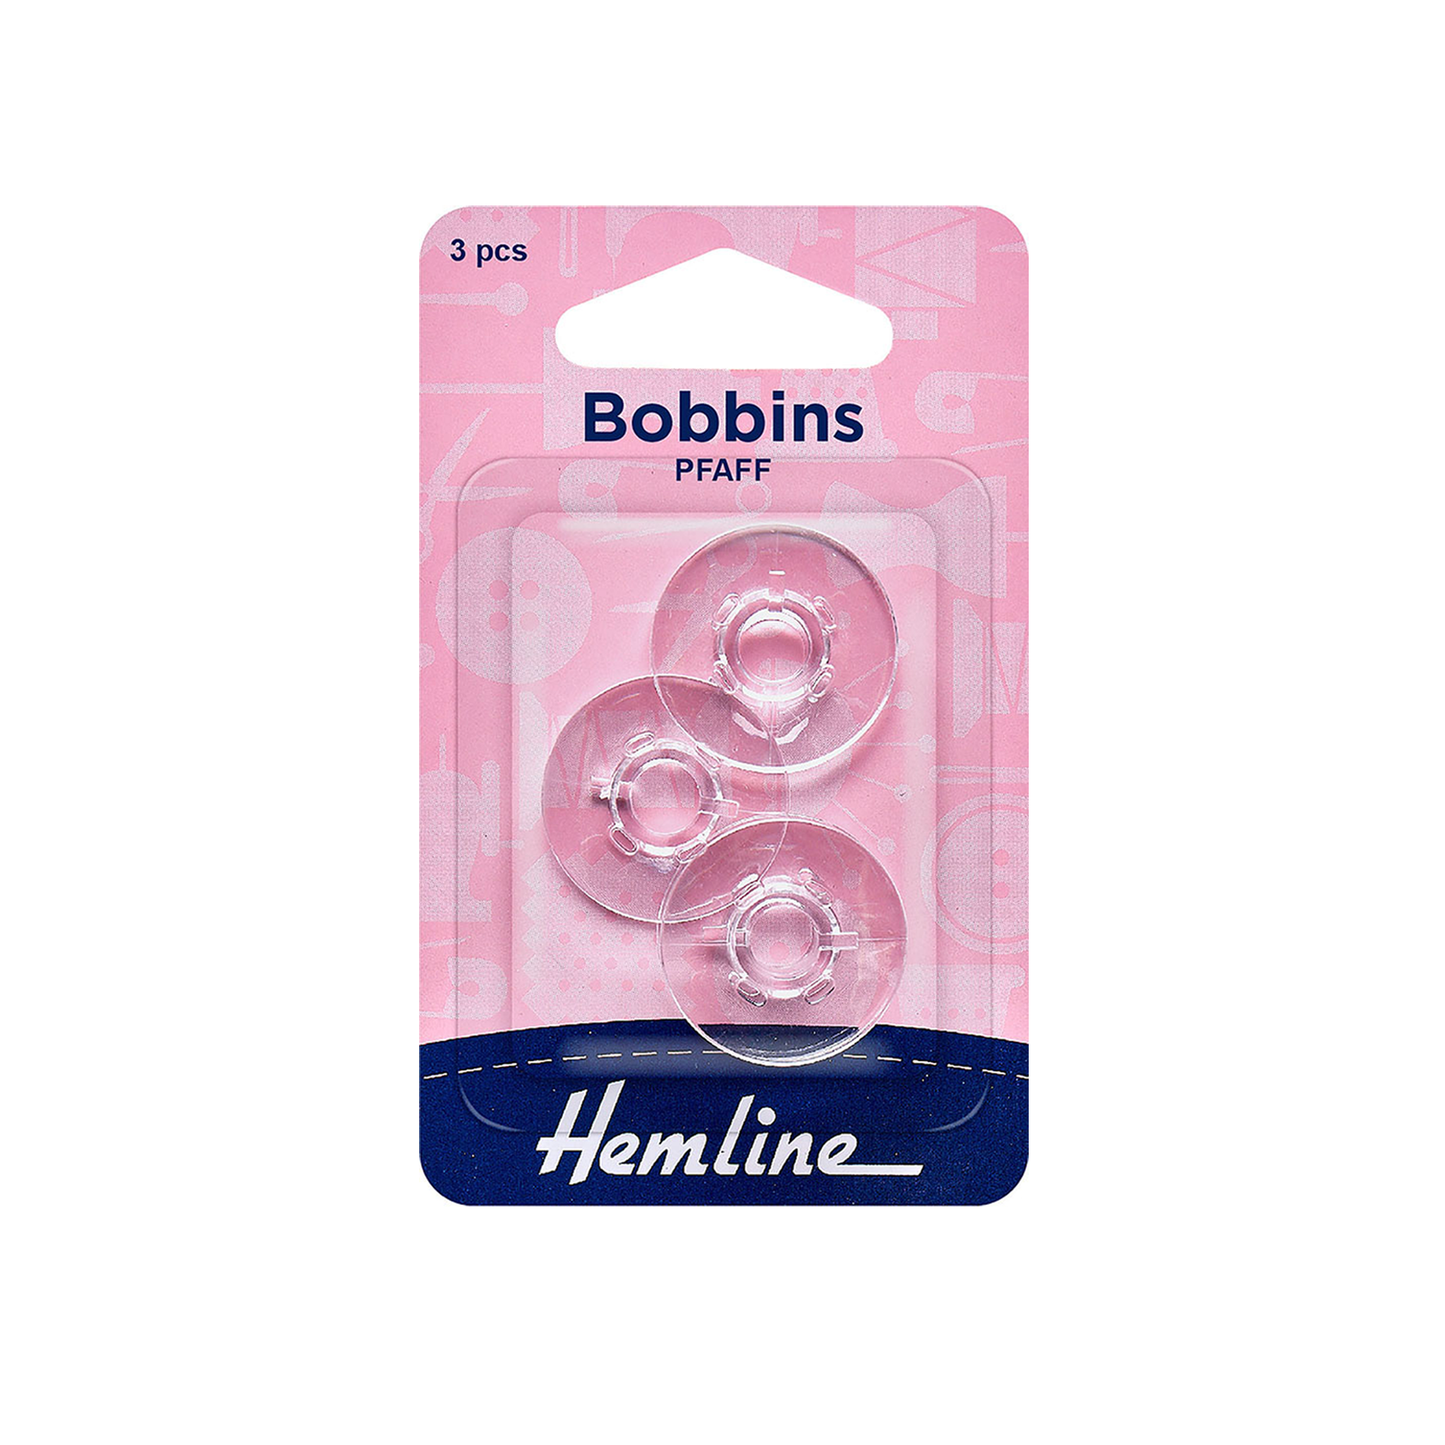 Hemline Bobbins for Sewing Machines (Various Brands / Models)